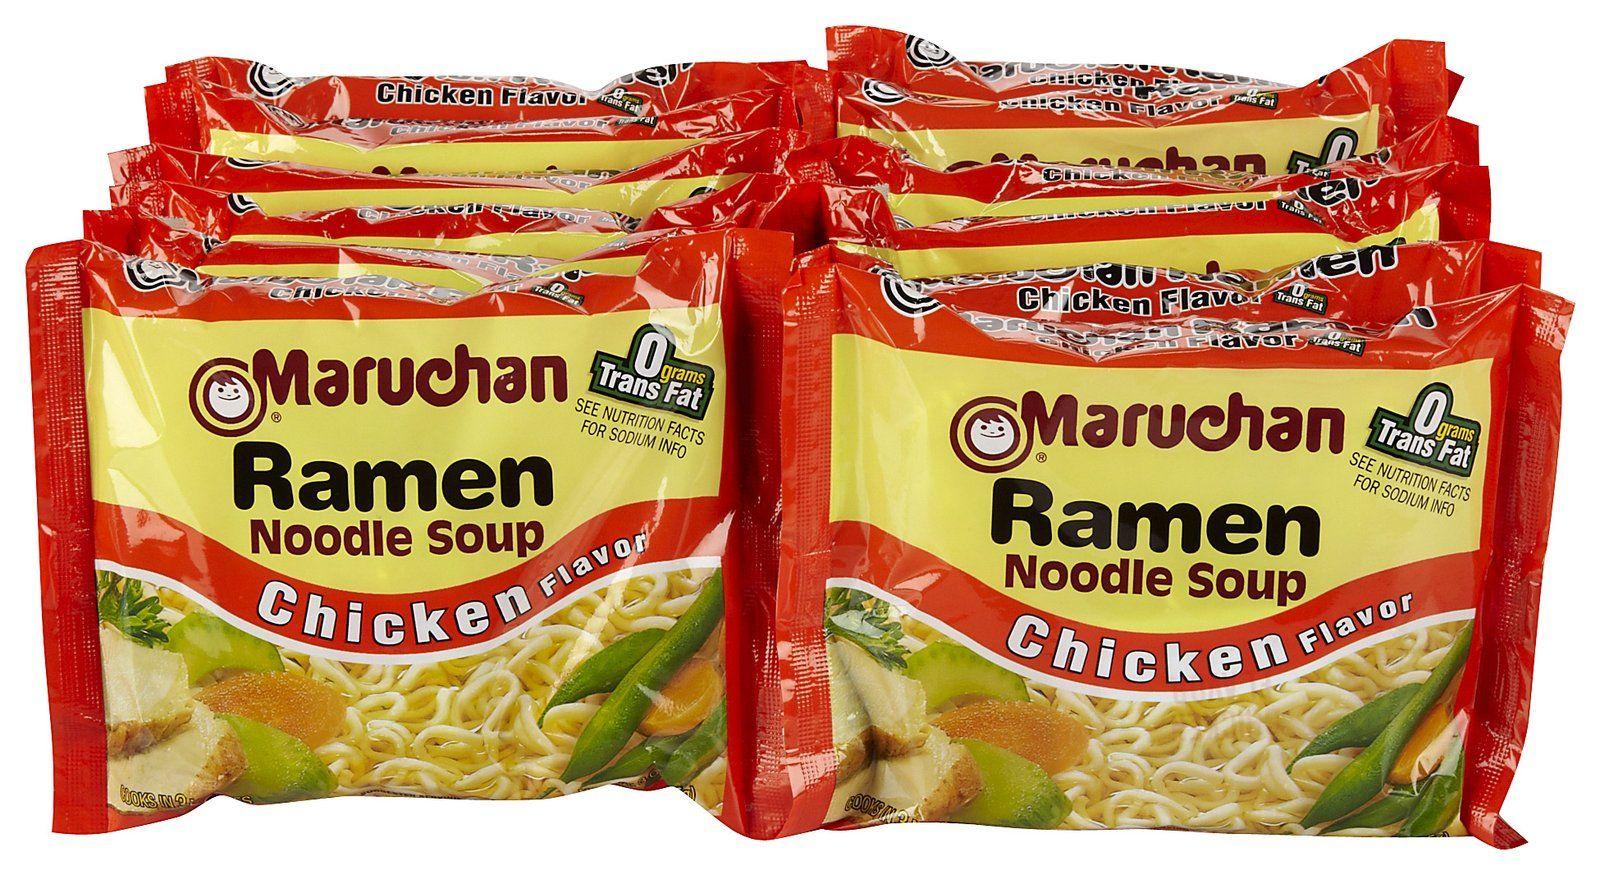 Maruchan Ramen Noodles Logo - The Ramen Noodle Diet: Not Just for College Students | Planet Forward